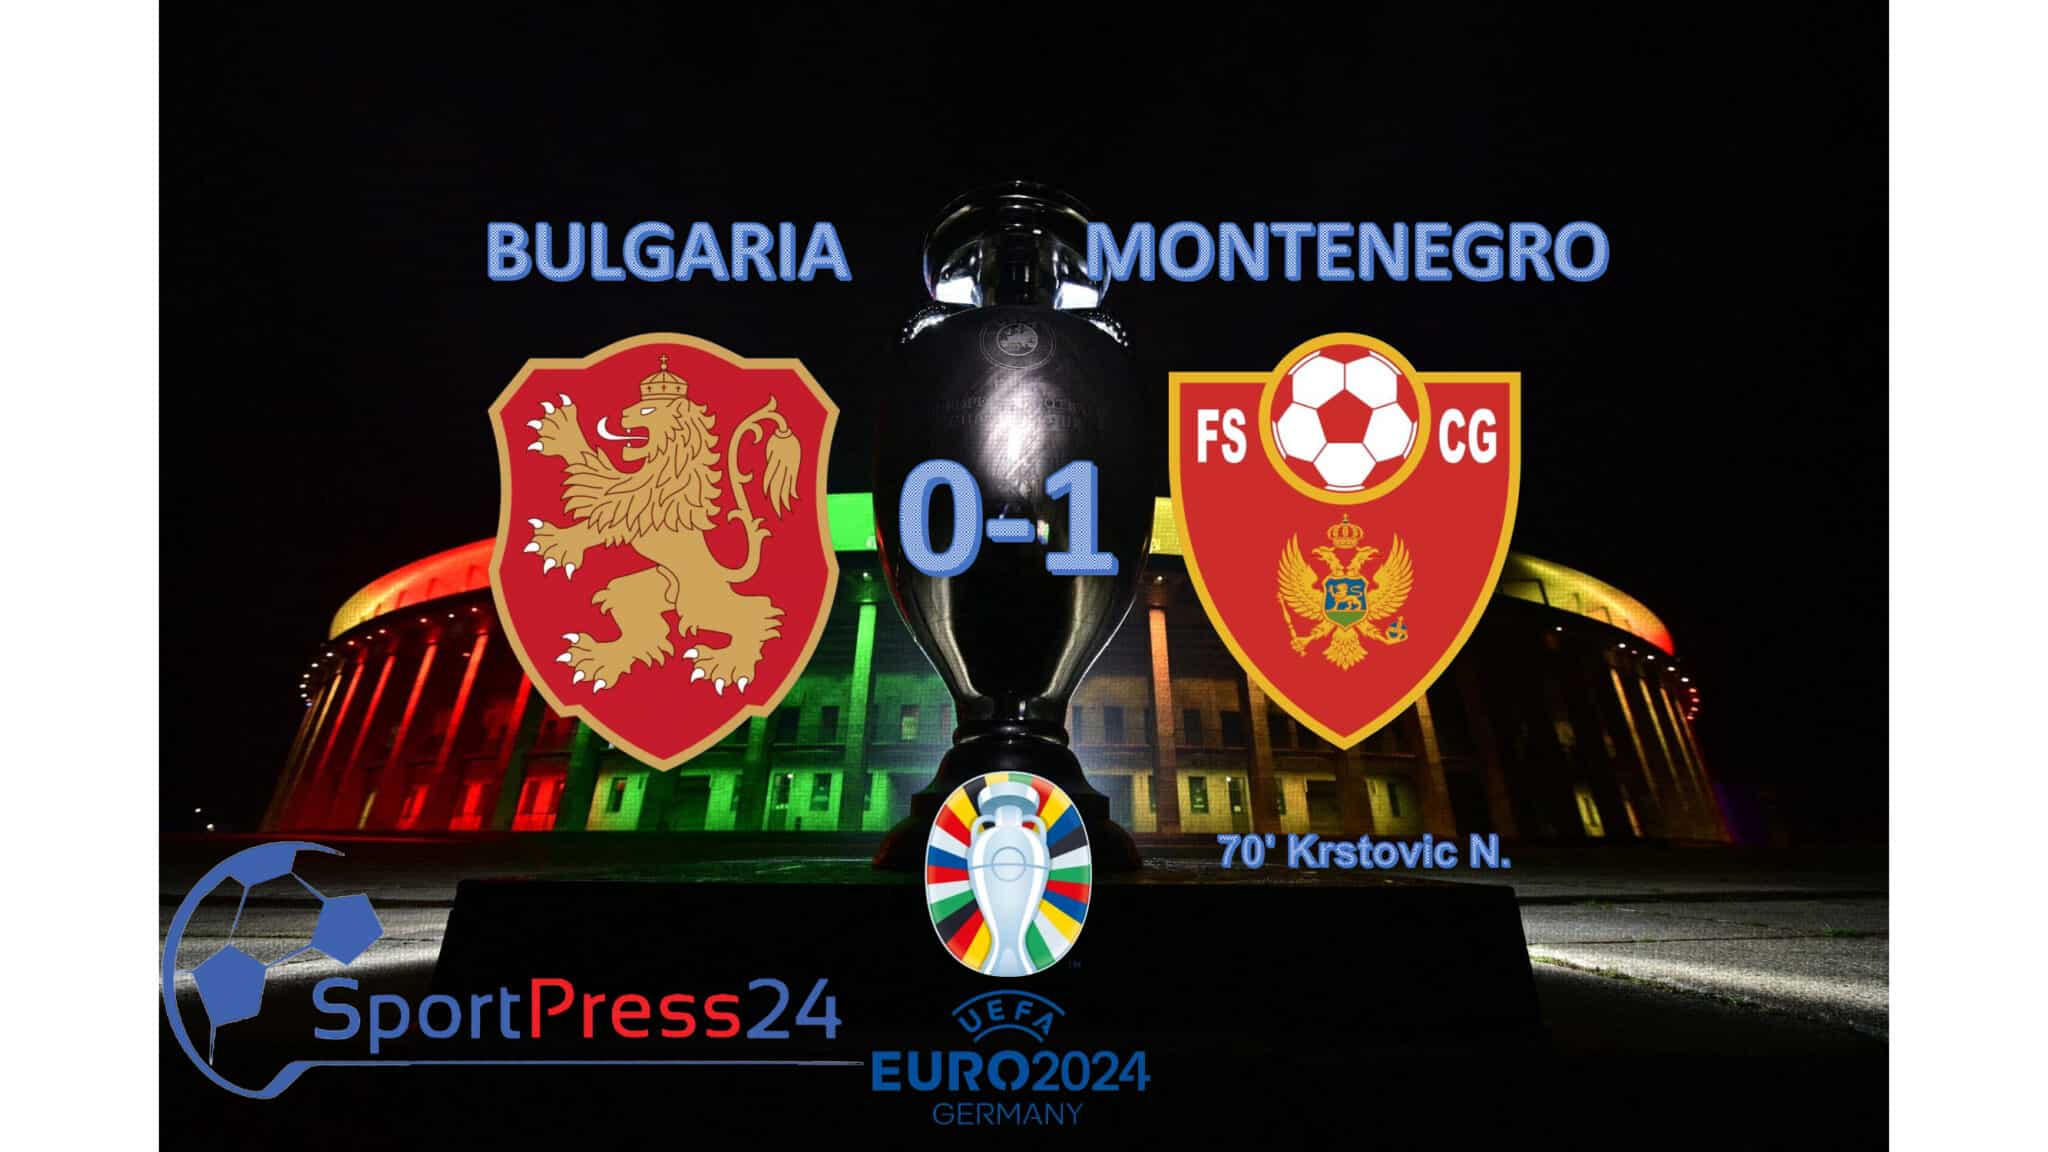 Qualificazioni Euro 2024 - Bulgaria-Montenegro (immagine a cura di Valerio Giuseppe Bellinghieri)